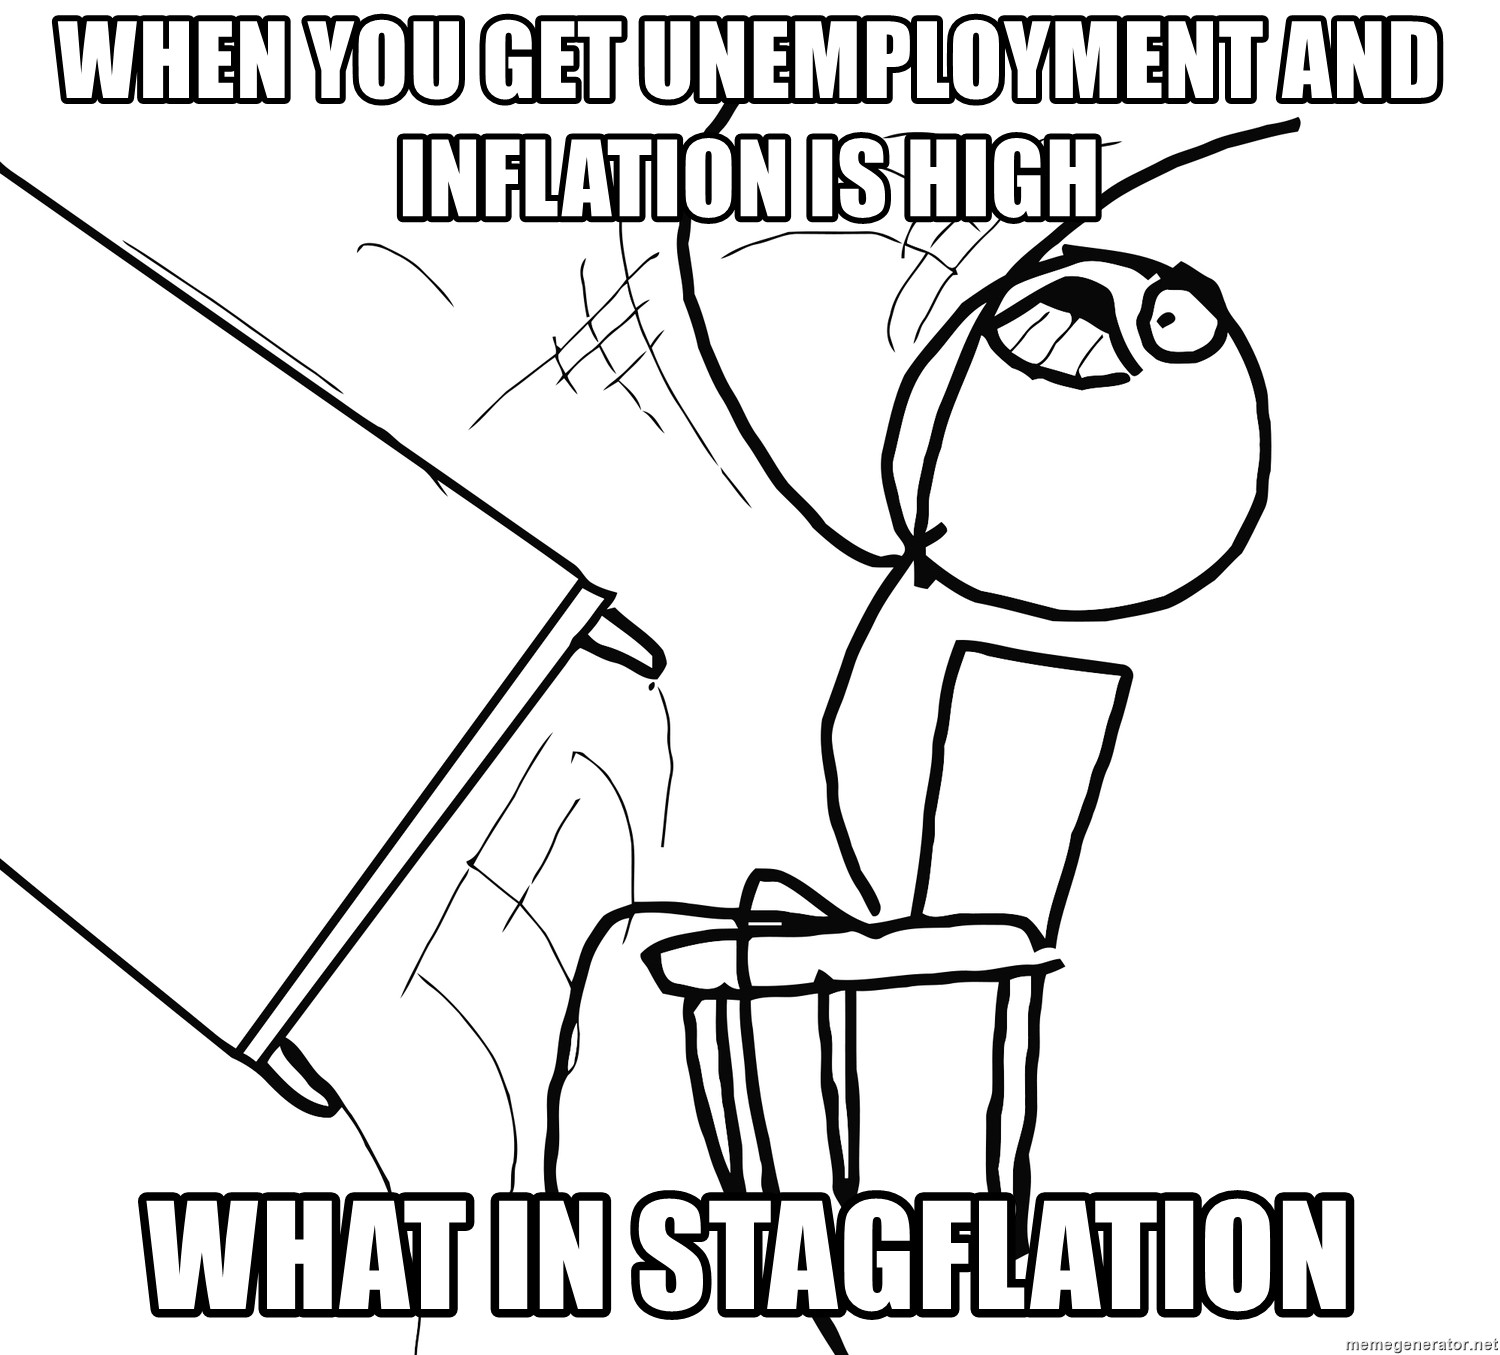 Stagflation meme